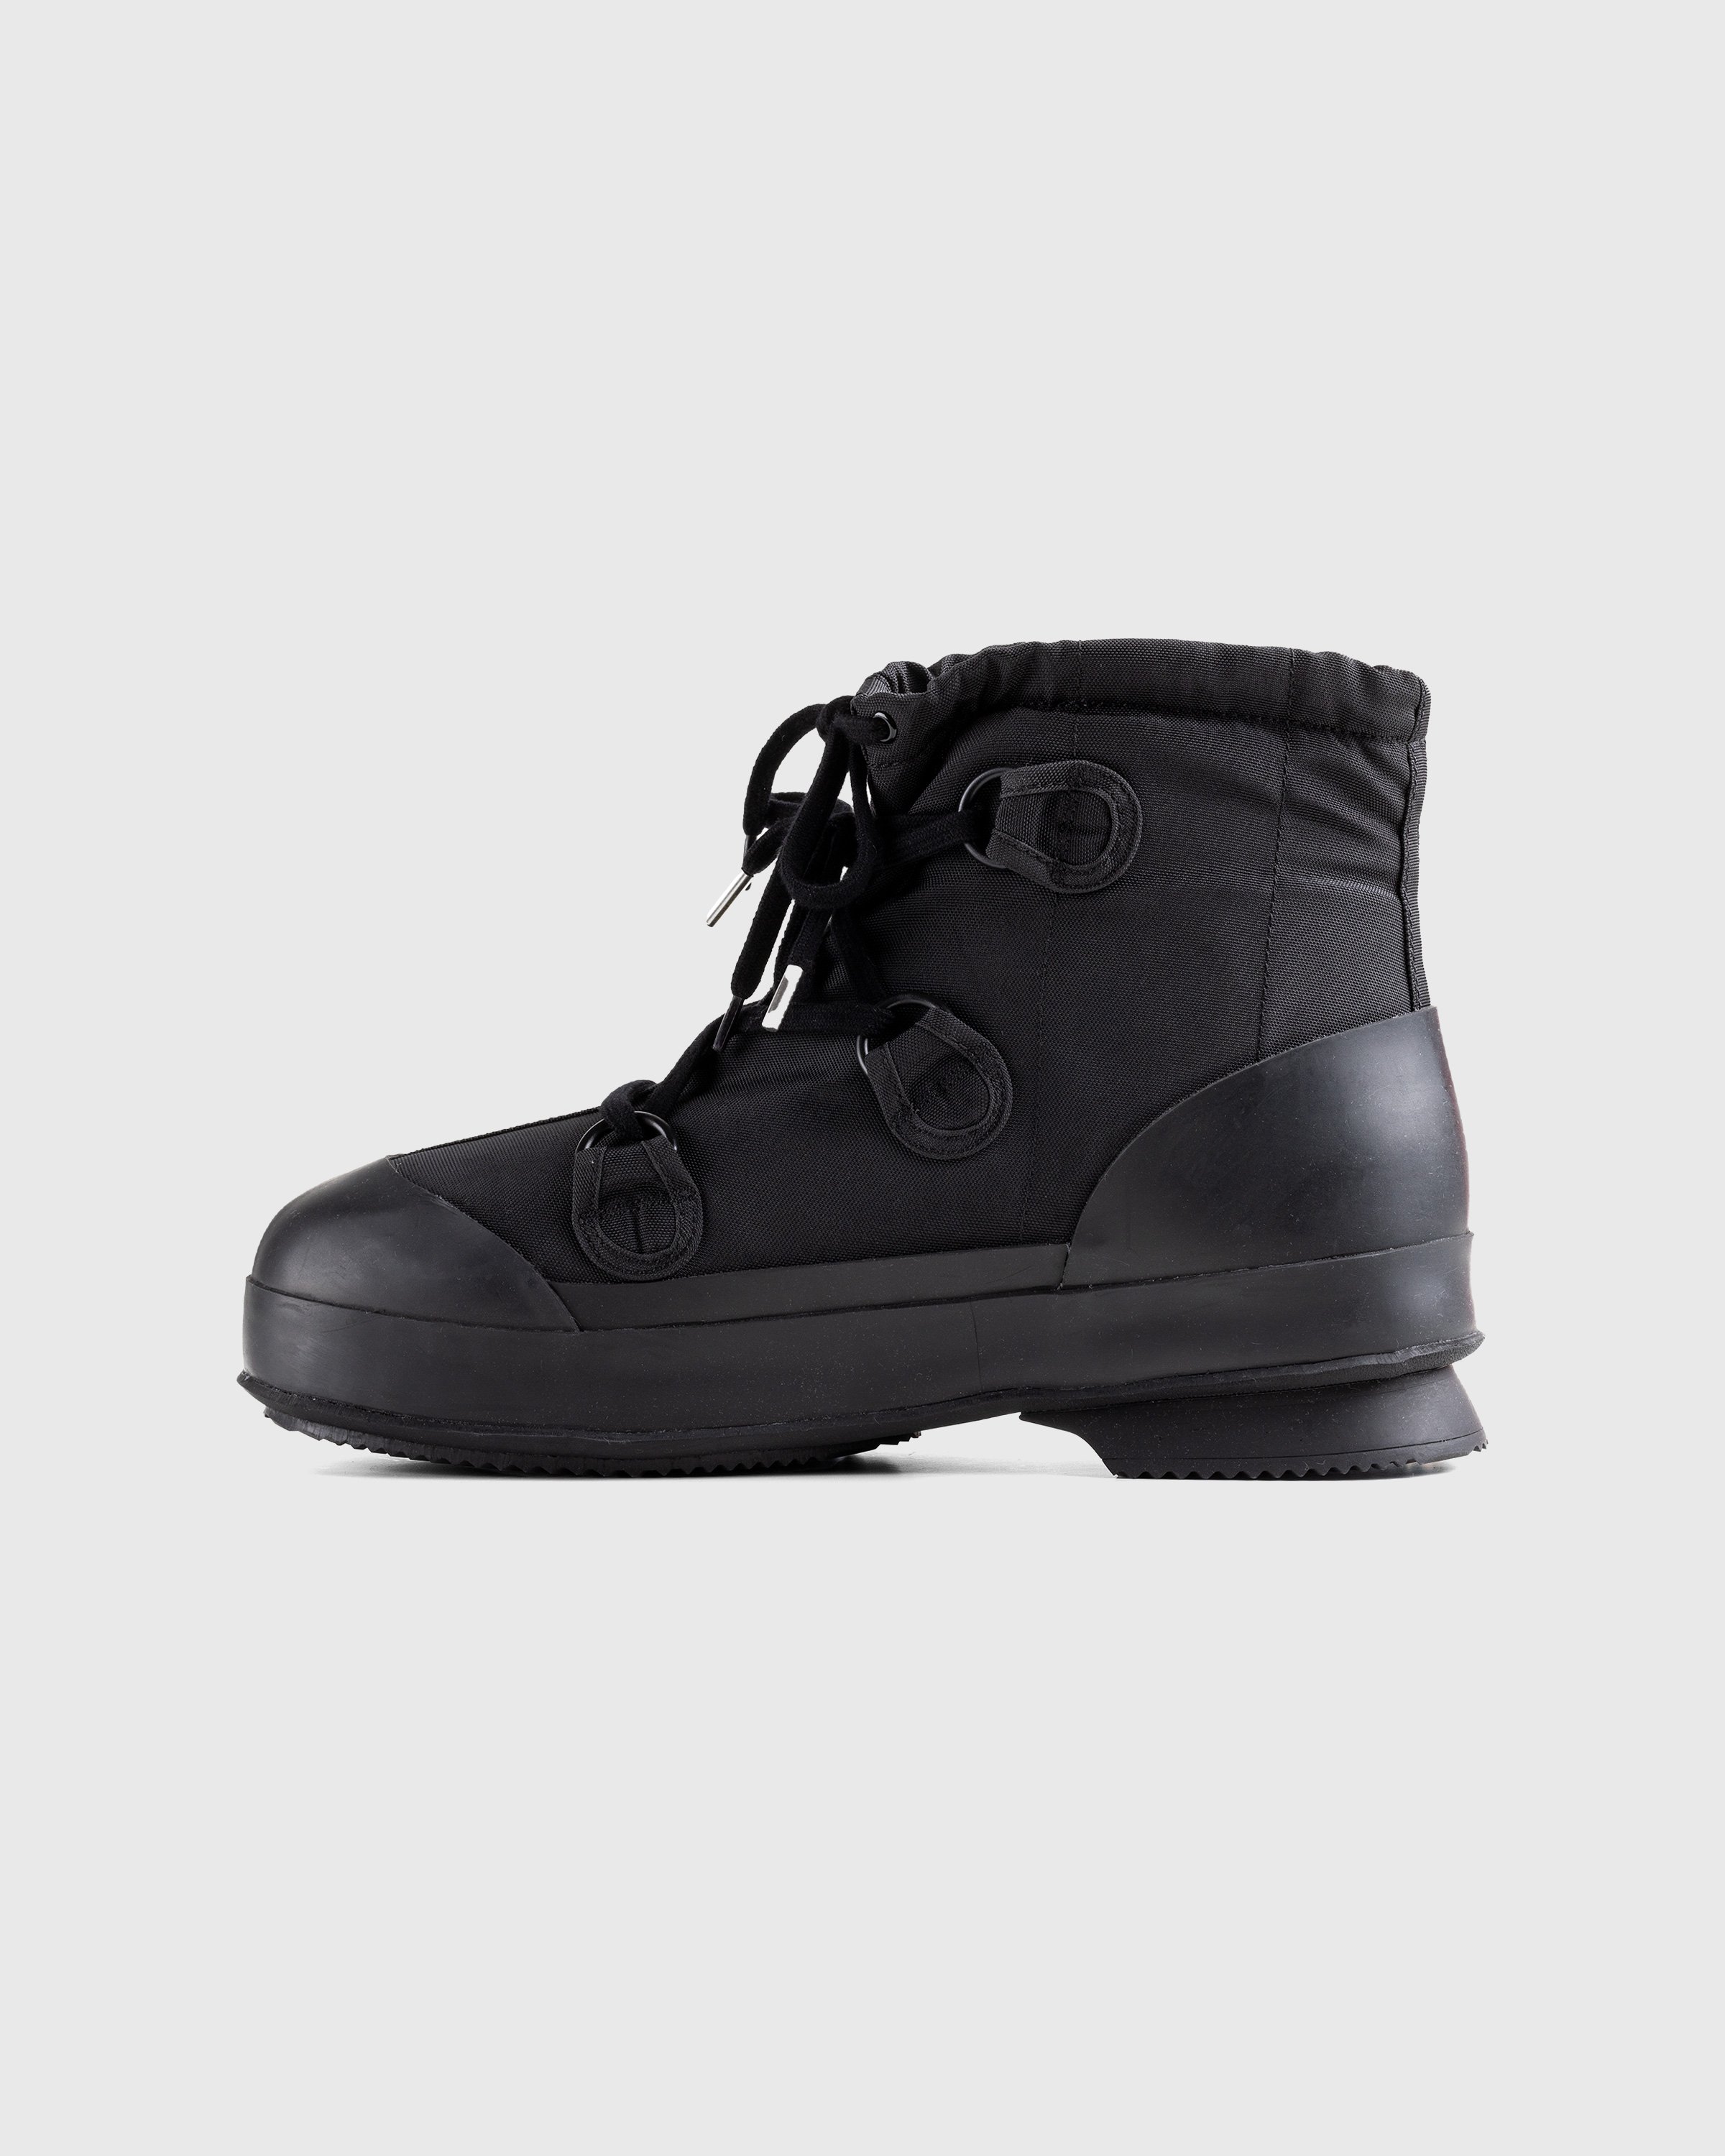 Acne Studios - Lace-Up Boots Black - Footwear - Black - Image 2